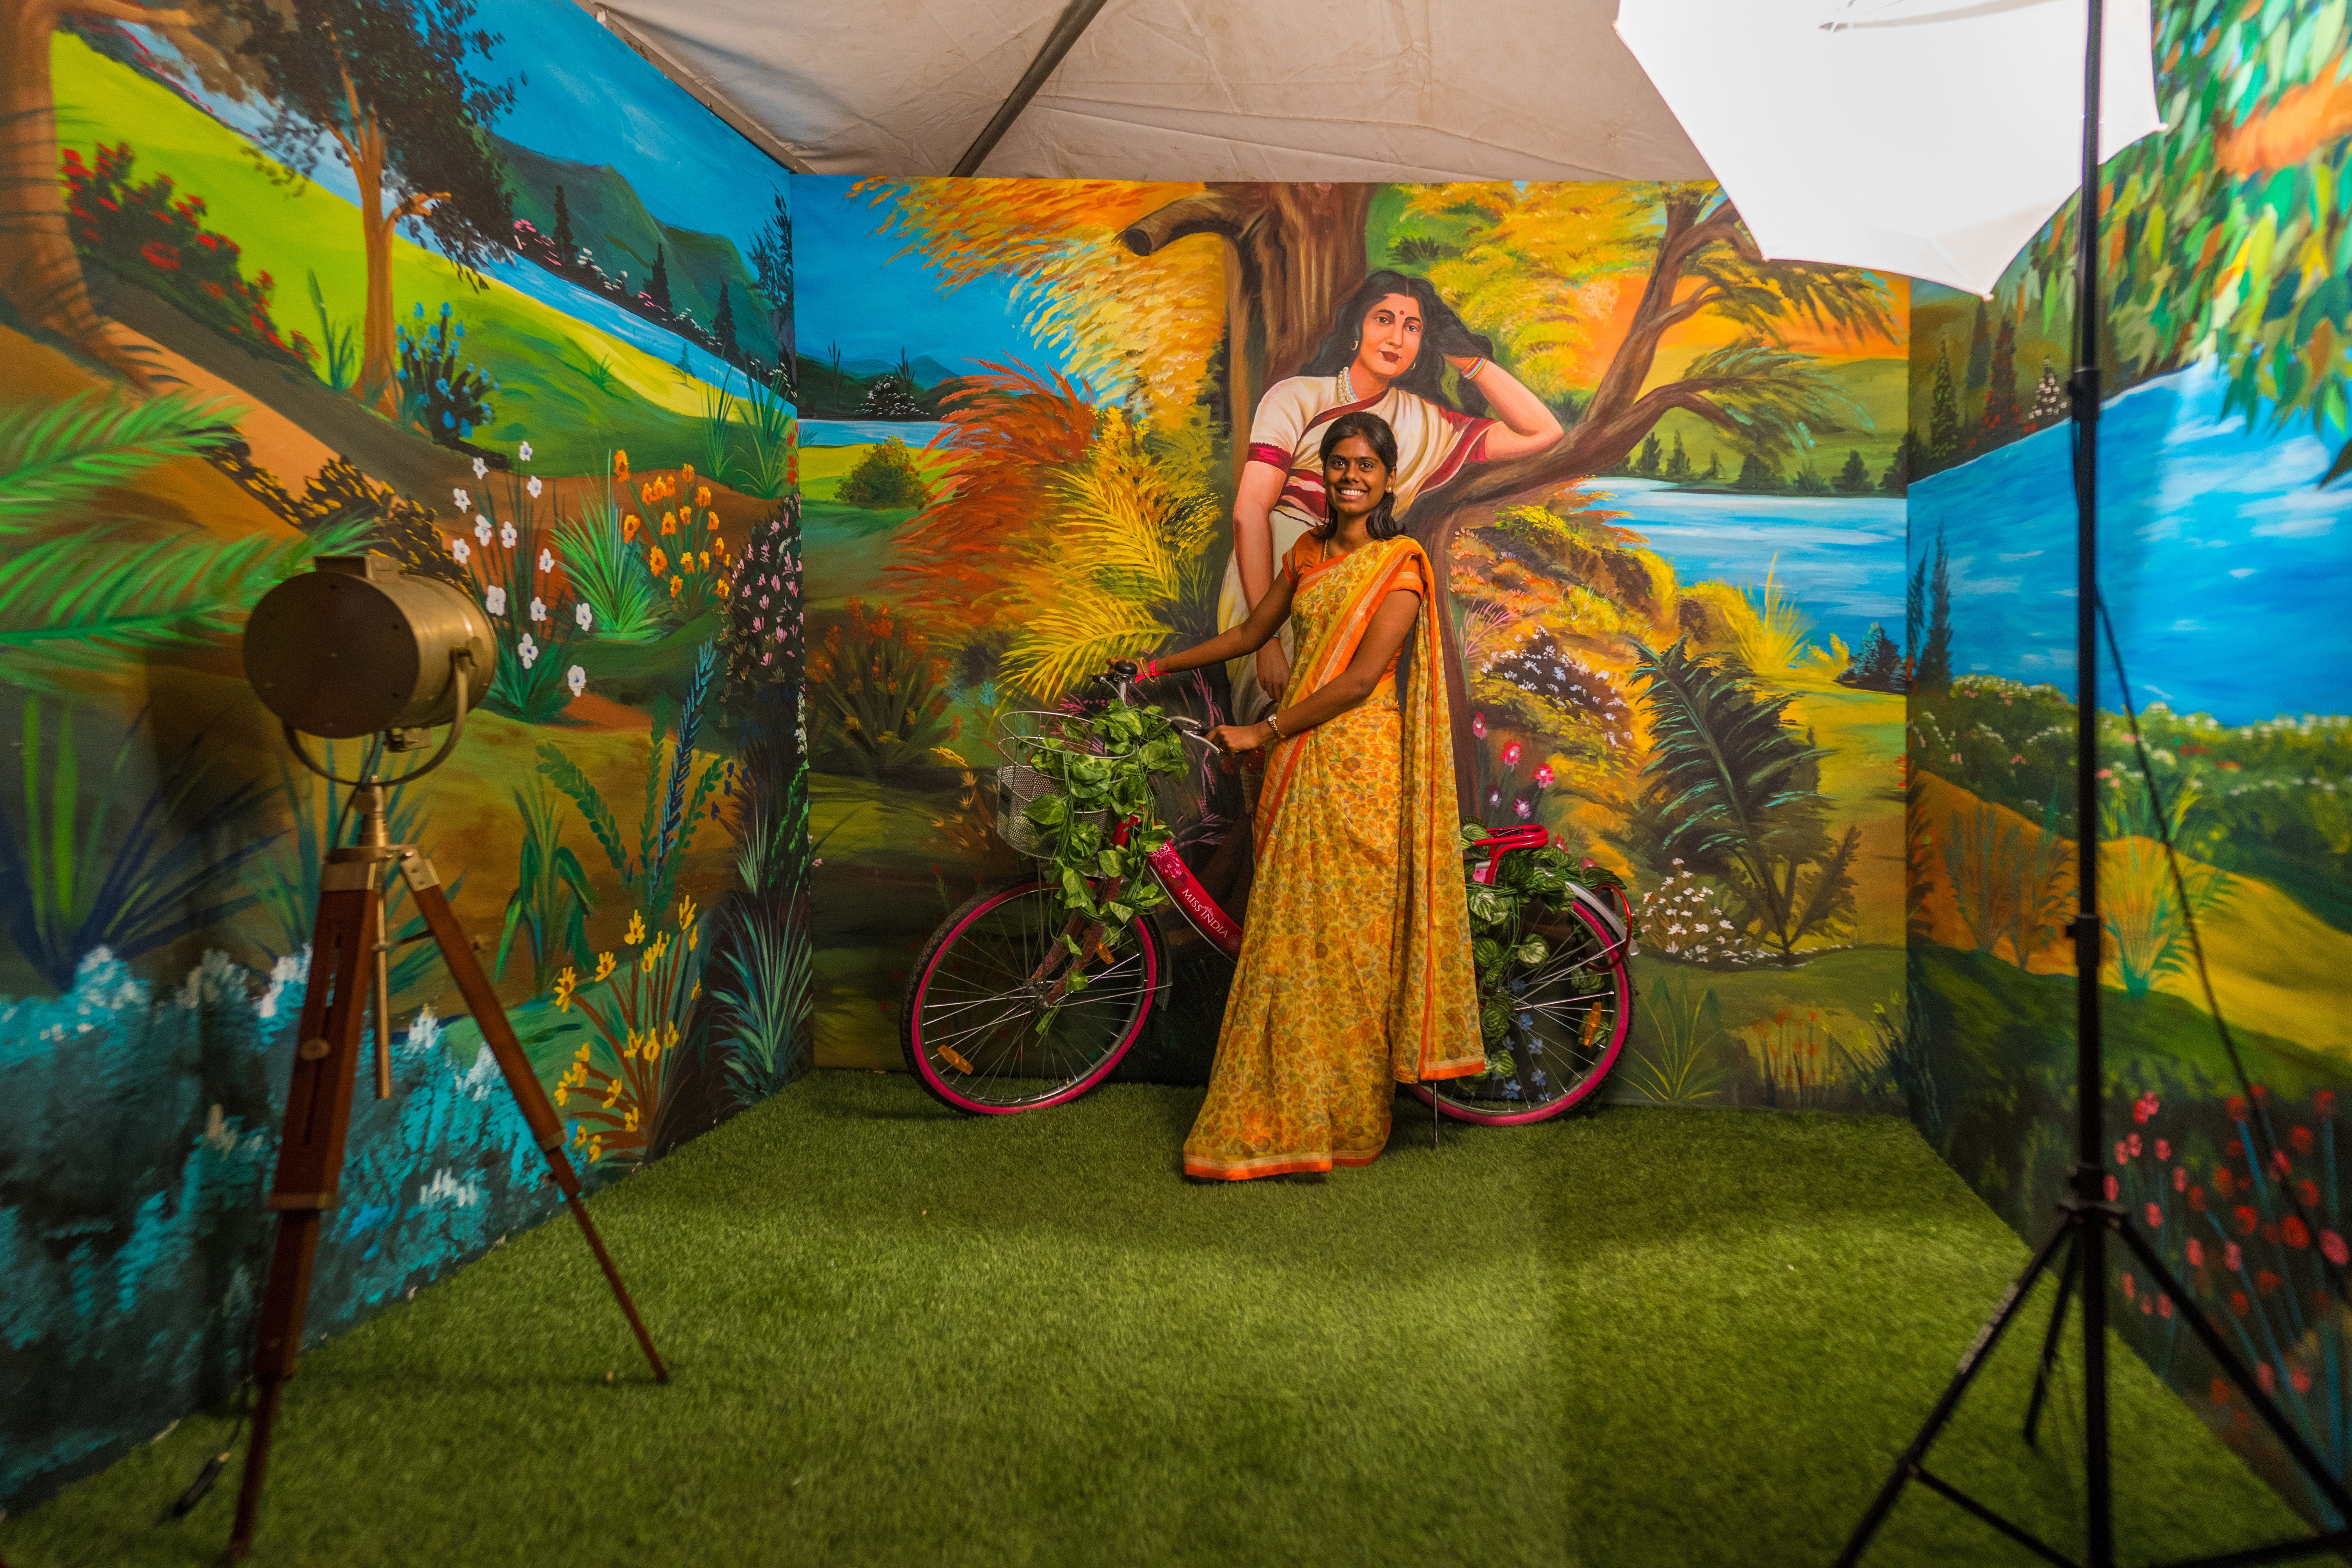 Travelling Photobooth India Pop Phoenix Mall St Art Chennai 2020 Pranav Gohil 3